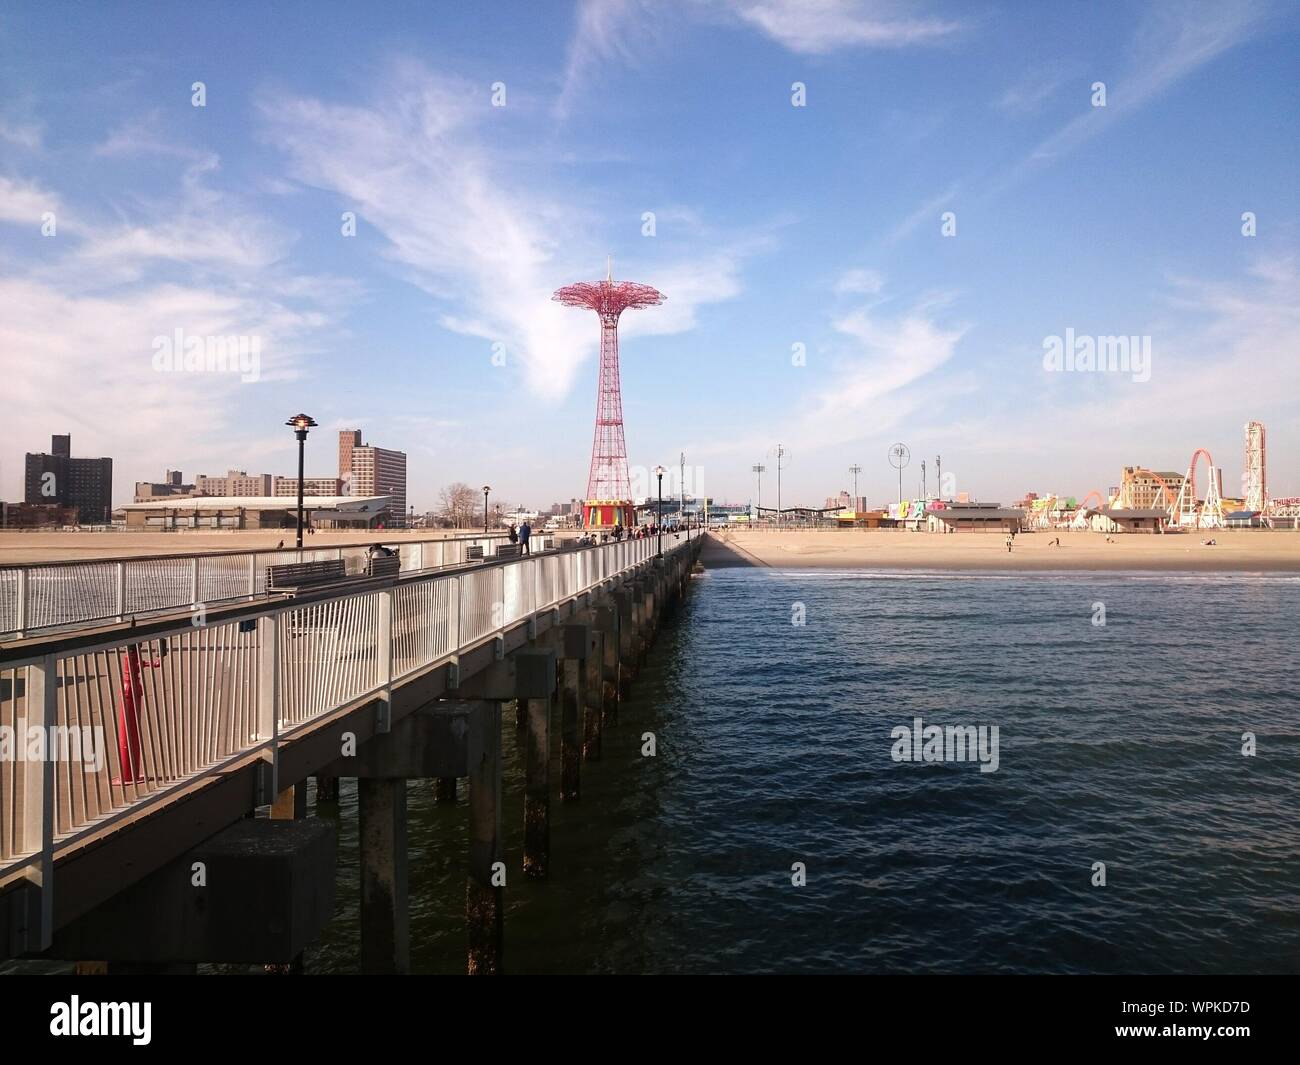 Pier Over Sea By Parachute Jump Against Sky Stock Photo